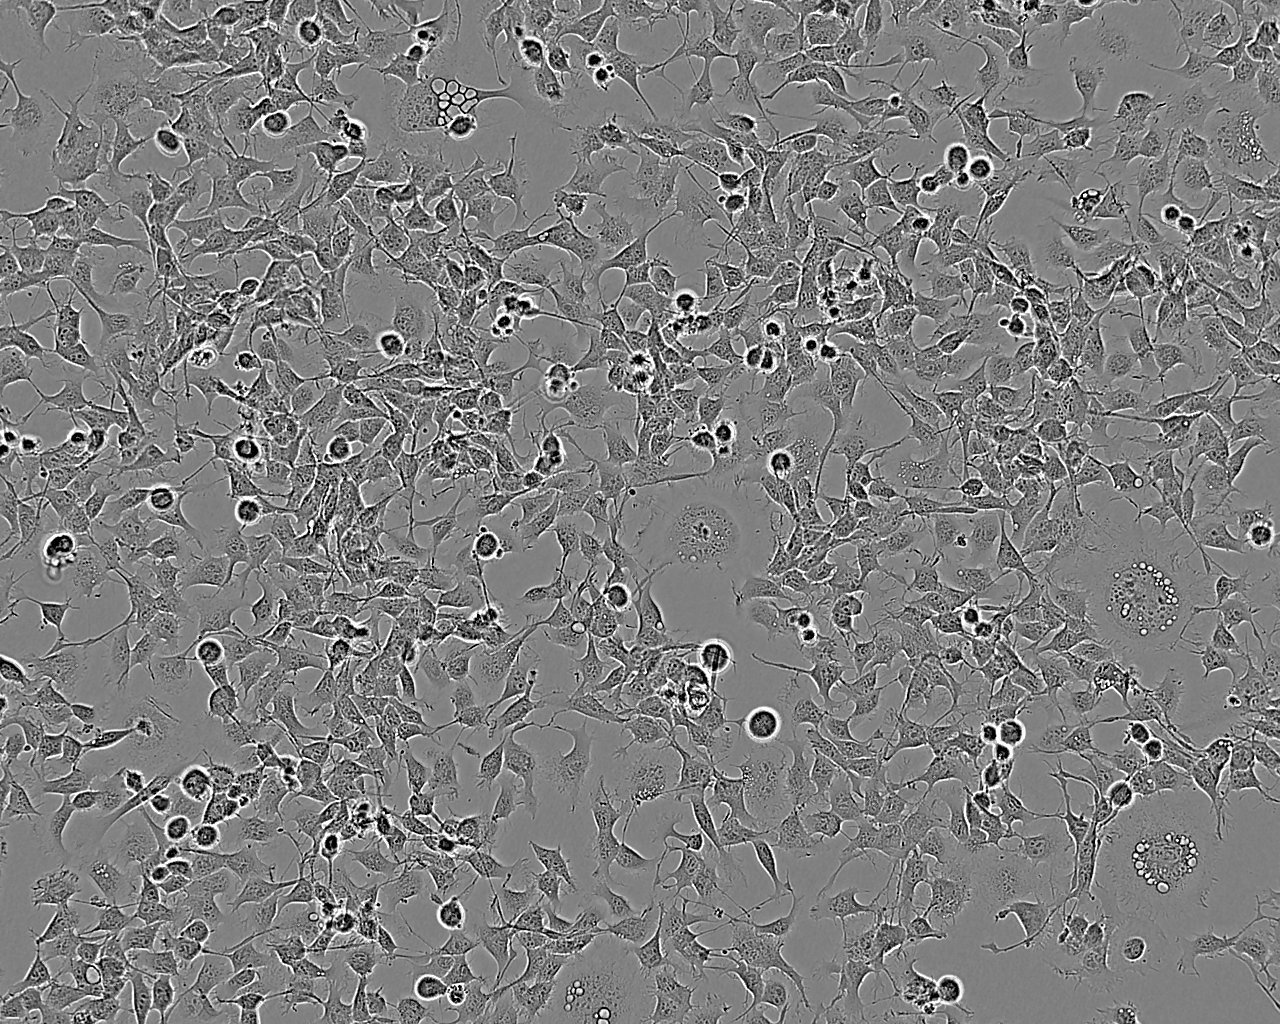 SCC7 cell line小鼠鳞状细胞癌细胞系,SCC7 cell line